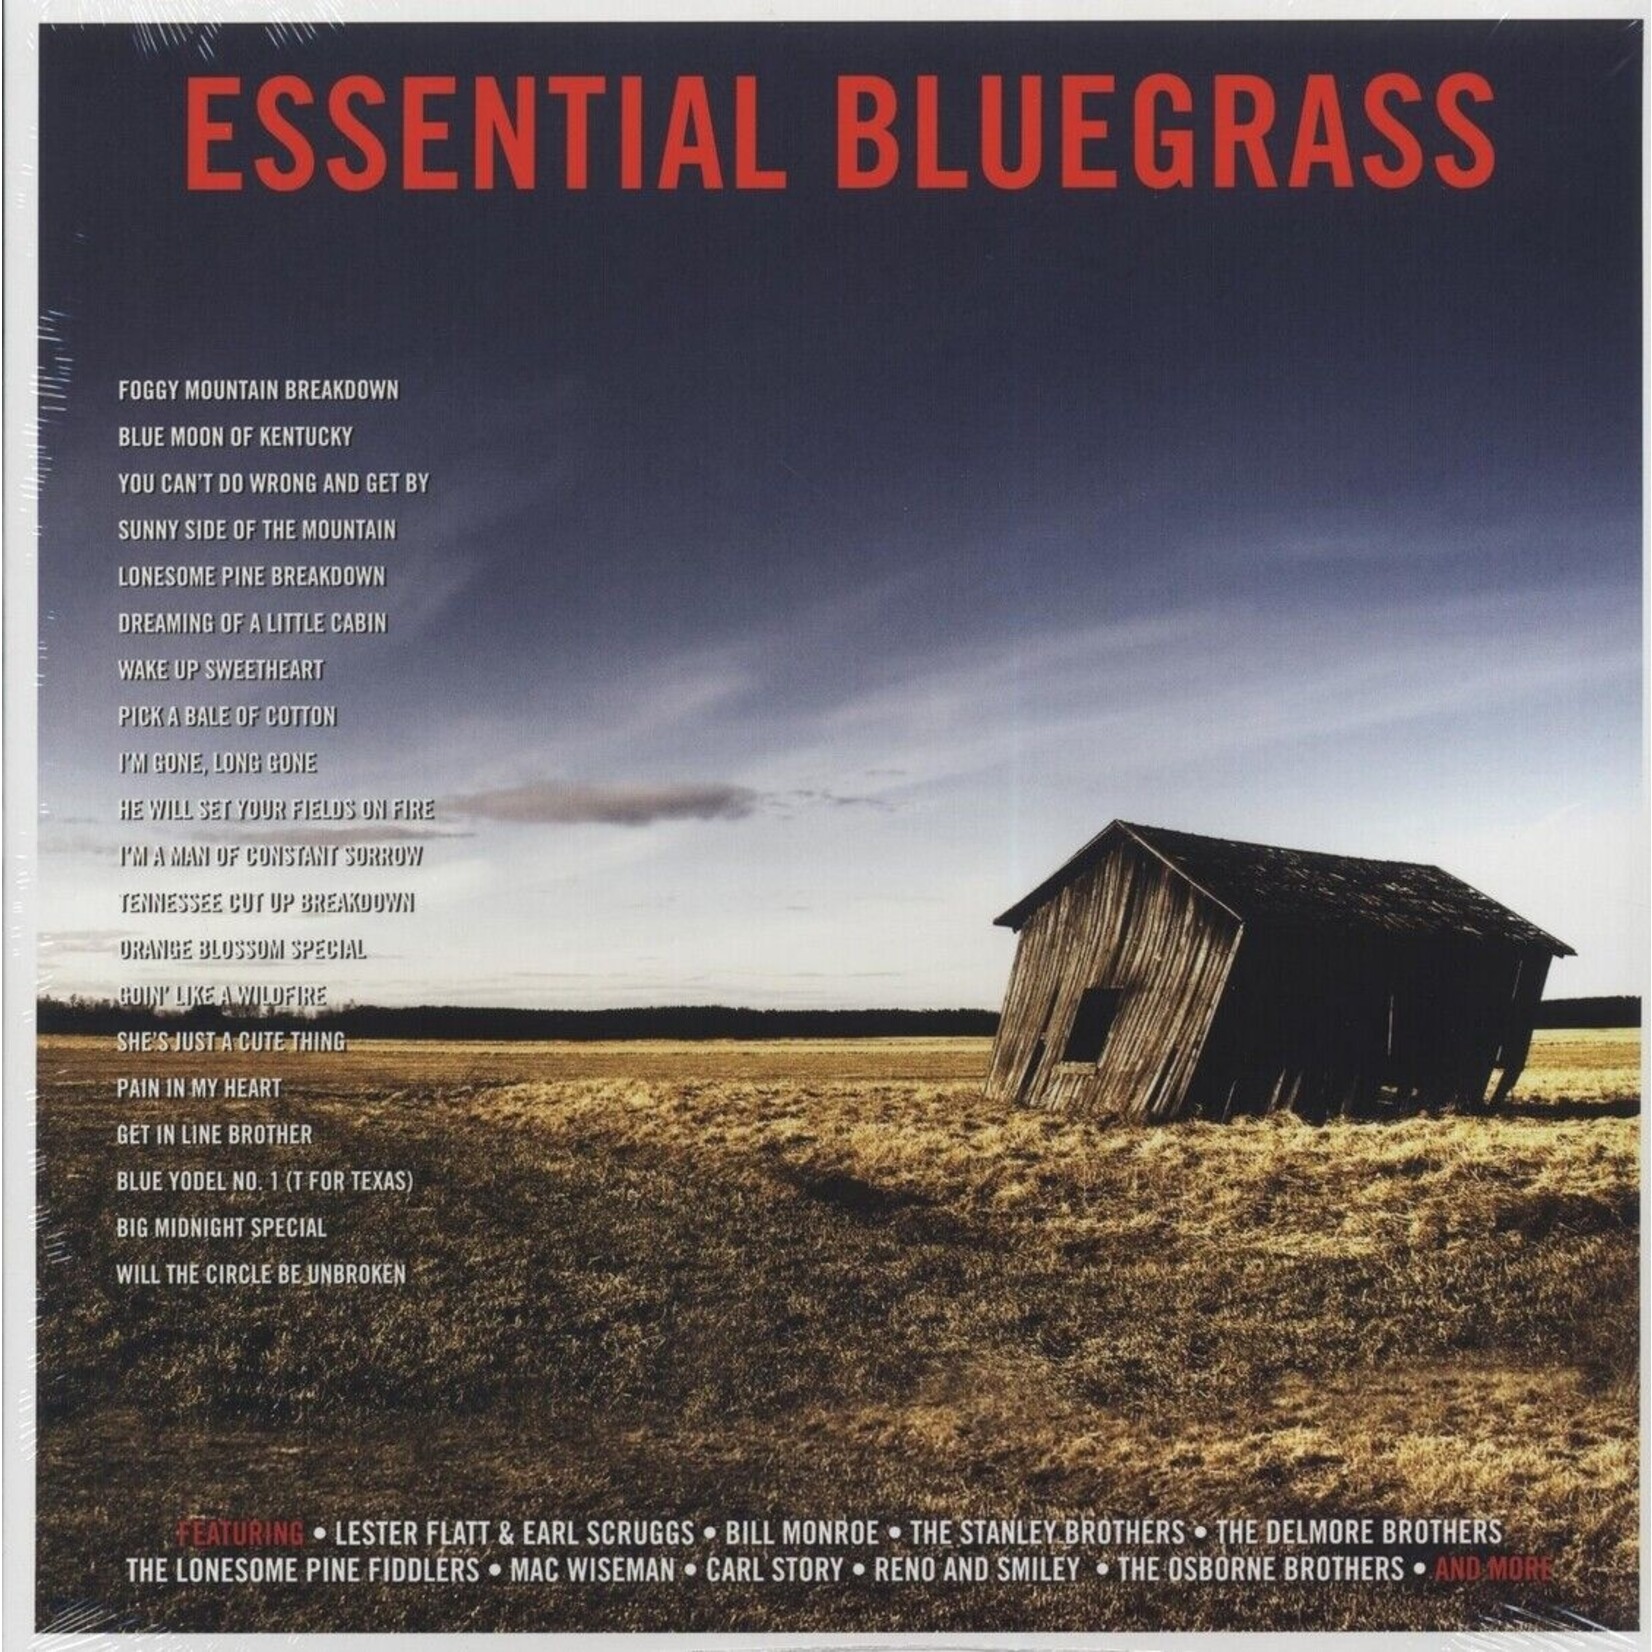 Bill Monroe, Flatt & Scruggs, The Stanley Brothers, Etc. - Essential Bluegrass (Not Now Music)